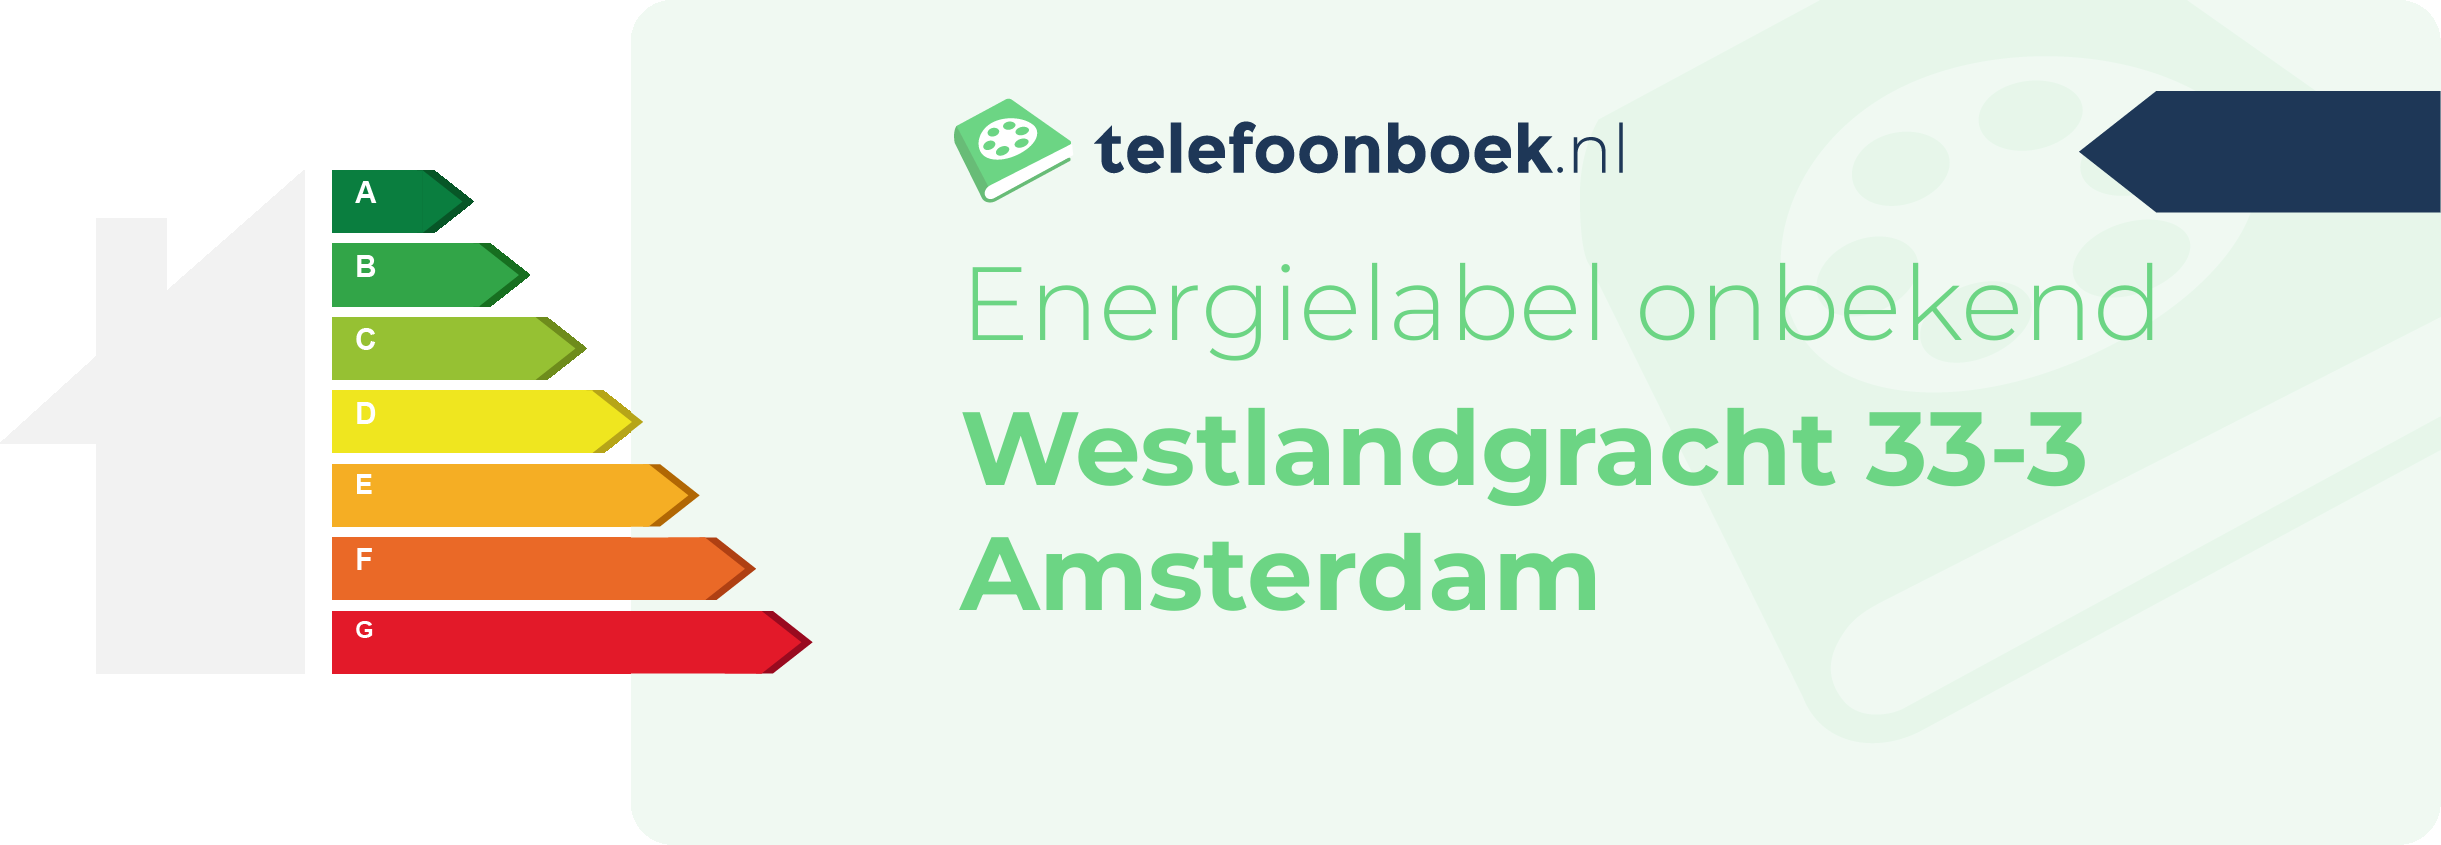 Energielabel Westlandgracht 33-3 Amsterdam